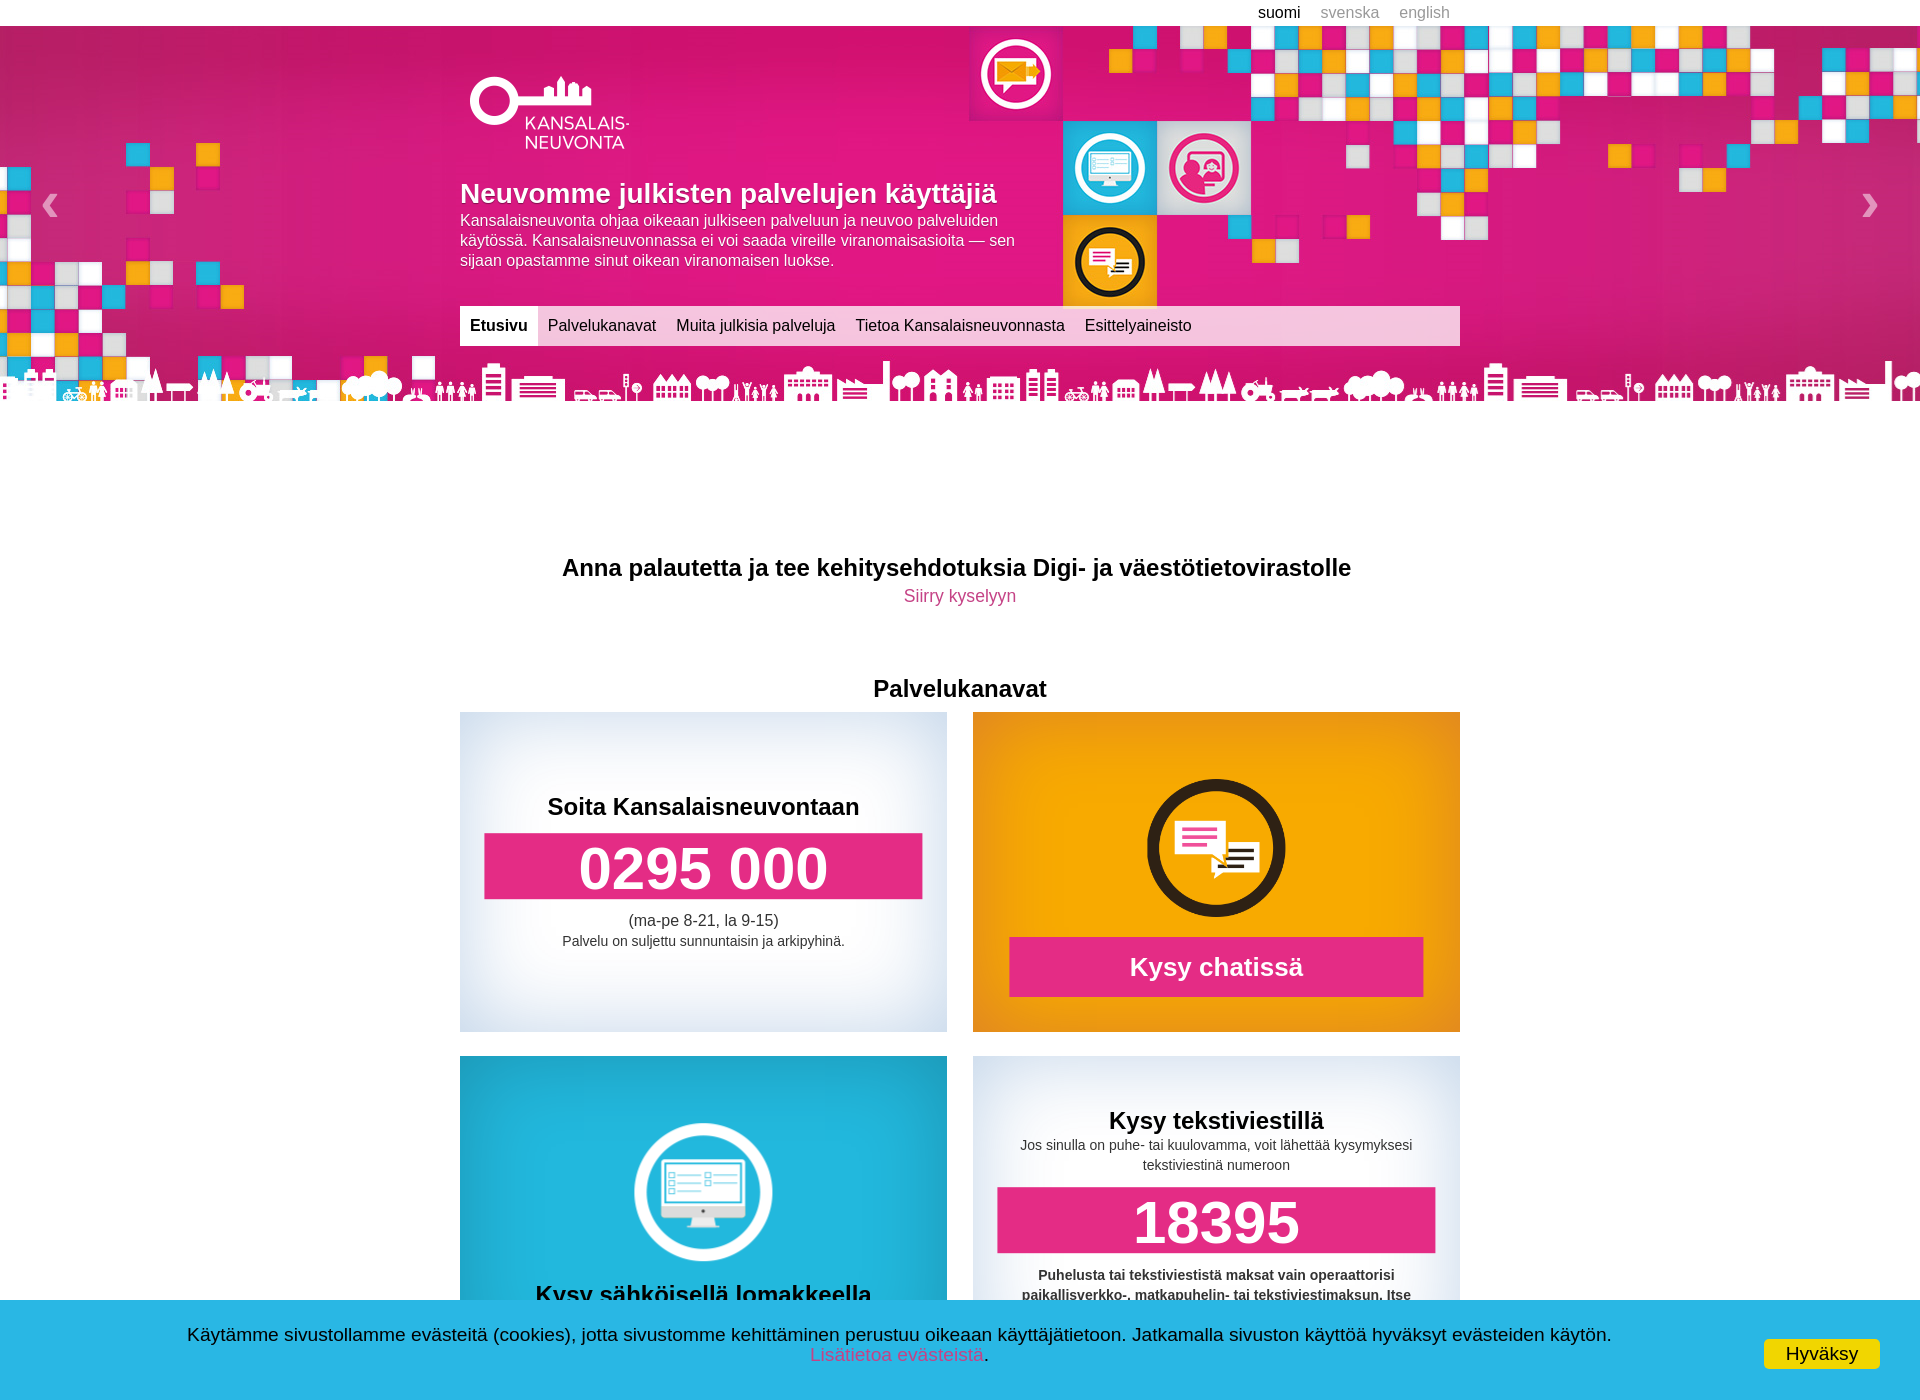 Skärmdump för citizensadvice.fi